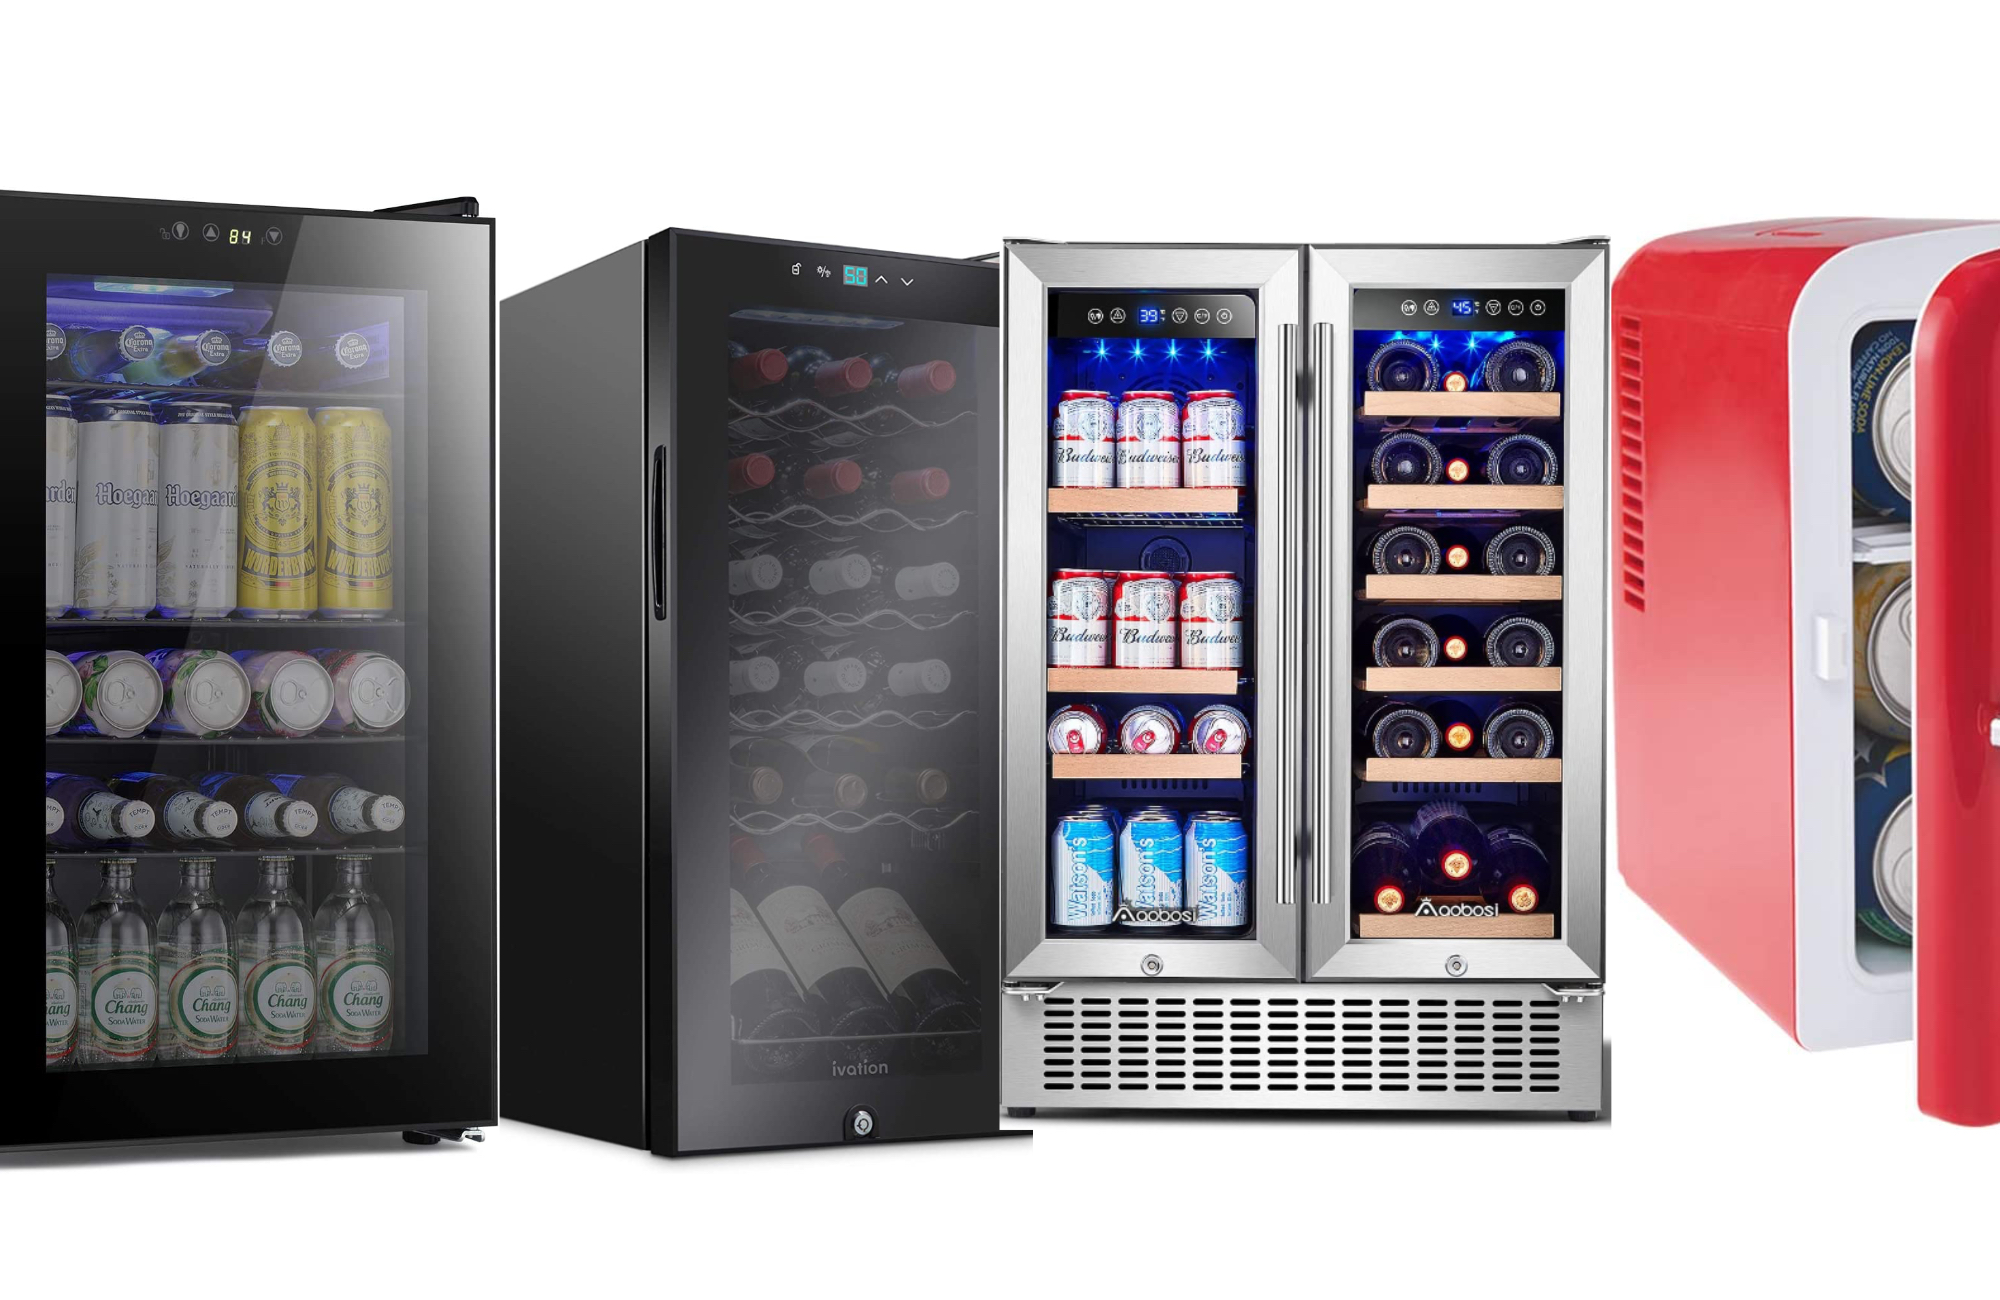 10 Best Coolers to Buy in 2023 - Food & Beverage Cooler Reviews